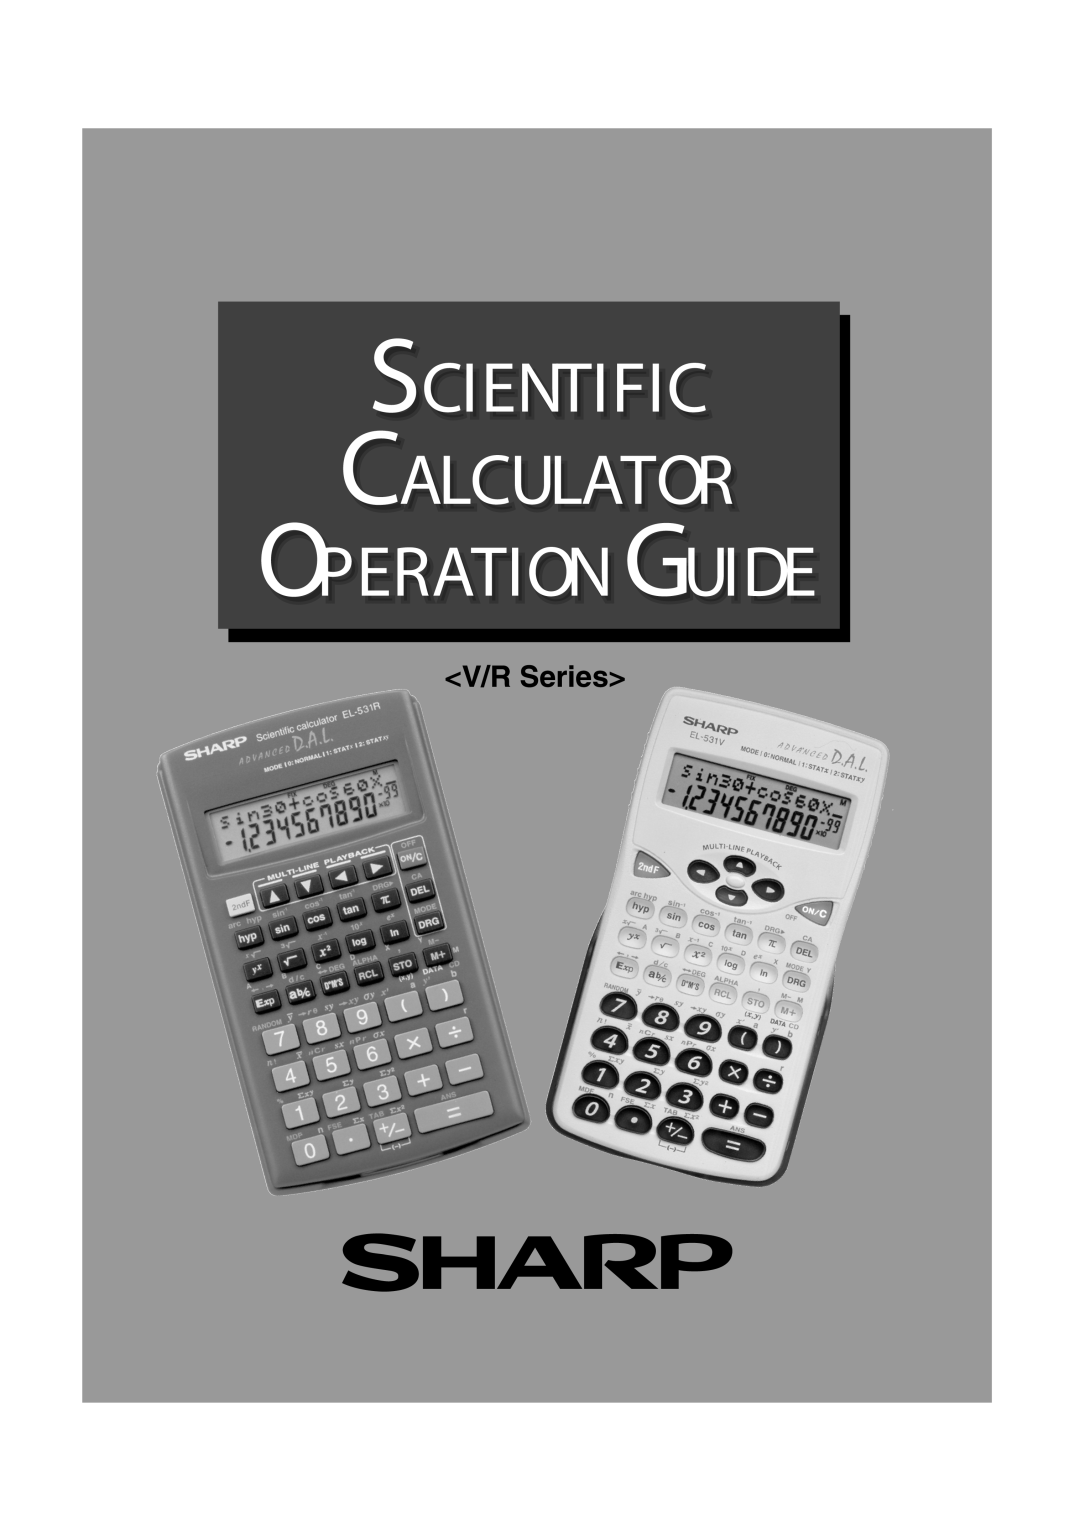 Sharp manual Sciientiifiic Calculator Operatiionguiide, V/R Series 